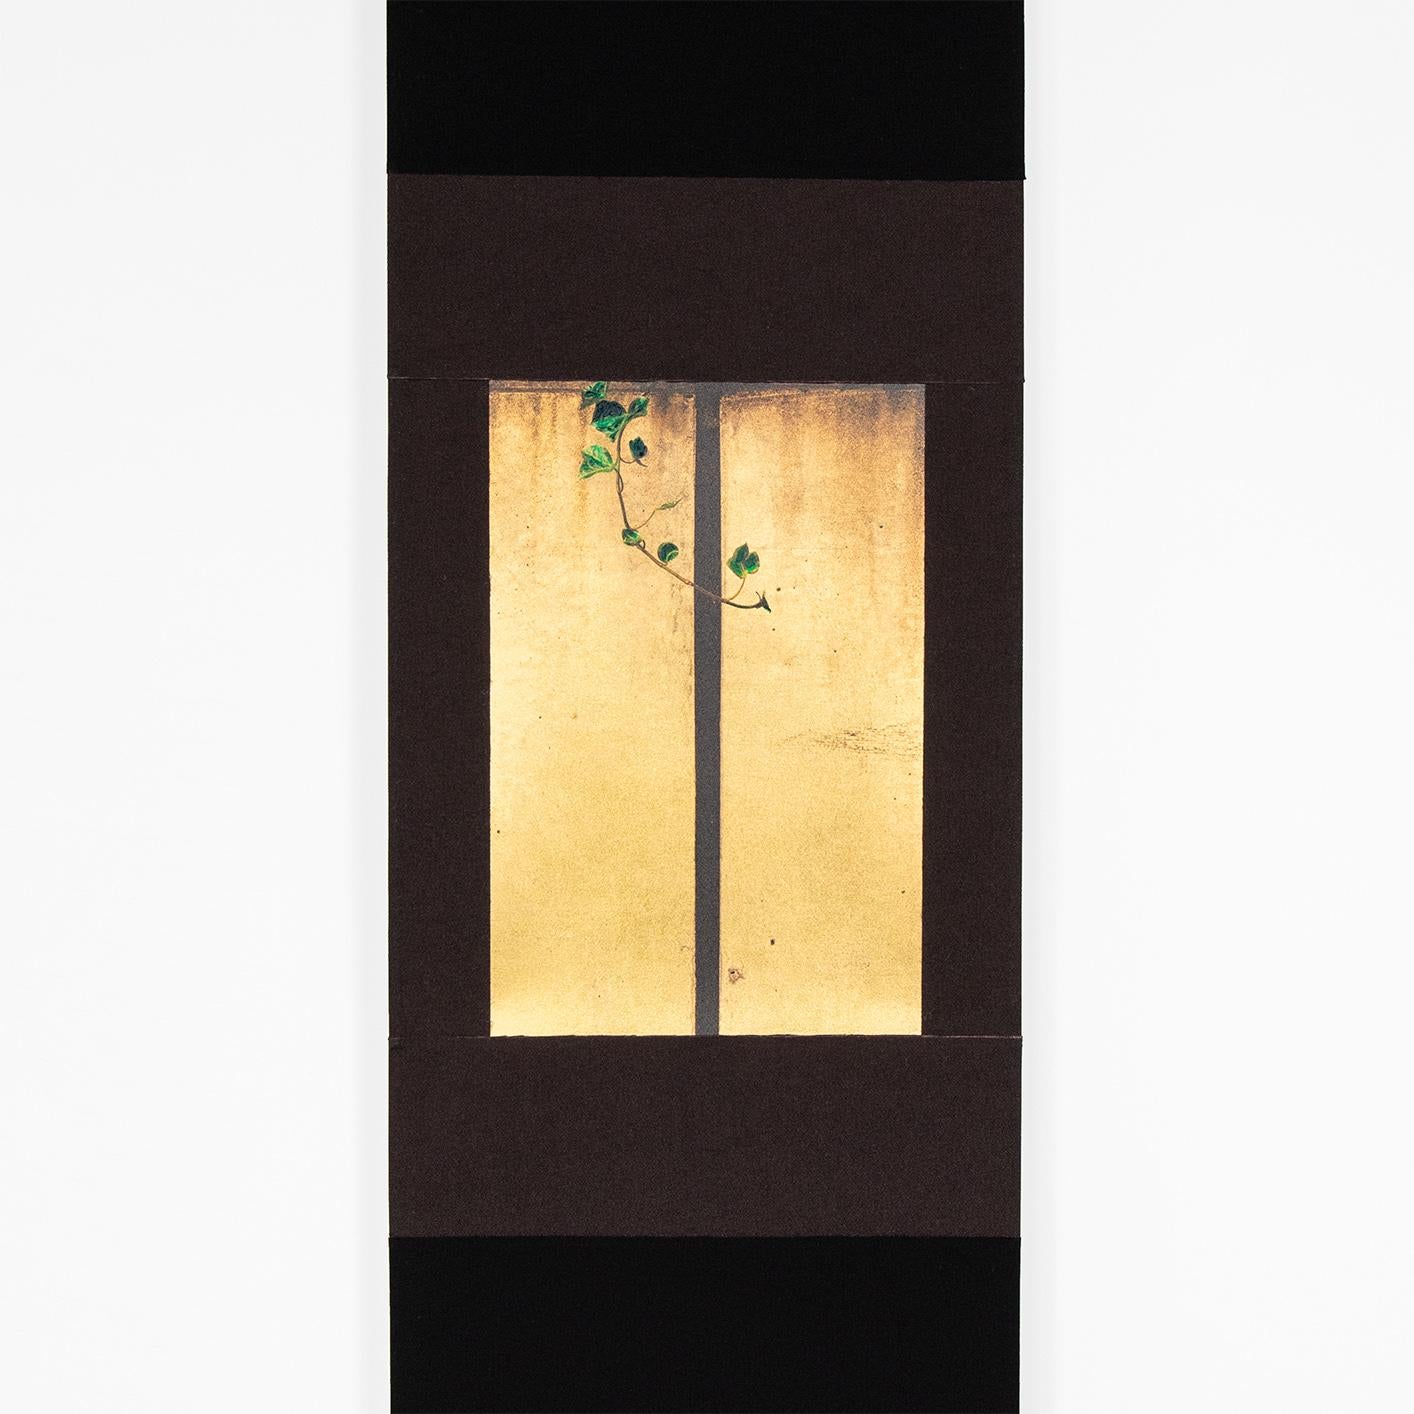 Japanese Contemporary Art by Kojun - Kensho 2101 For Sale 1